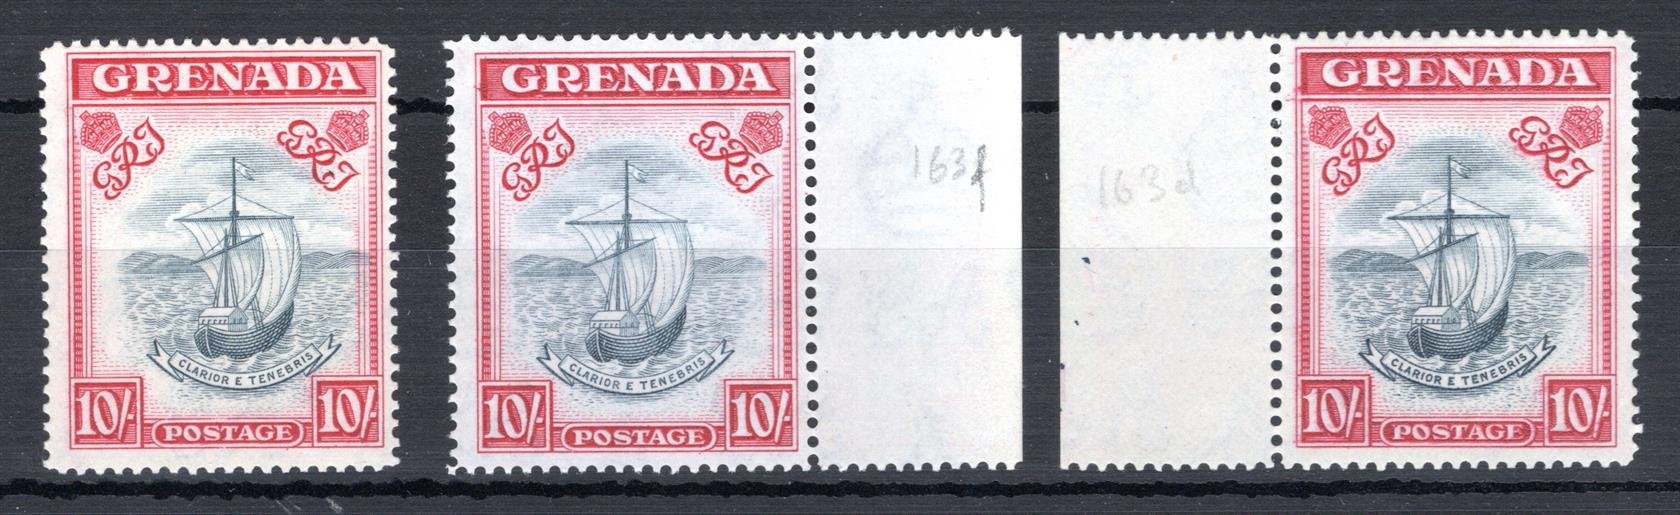 Grenada - SG. 163 b,d,e, výplatní, 490 L